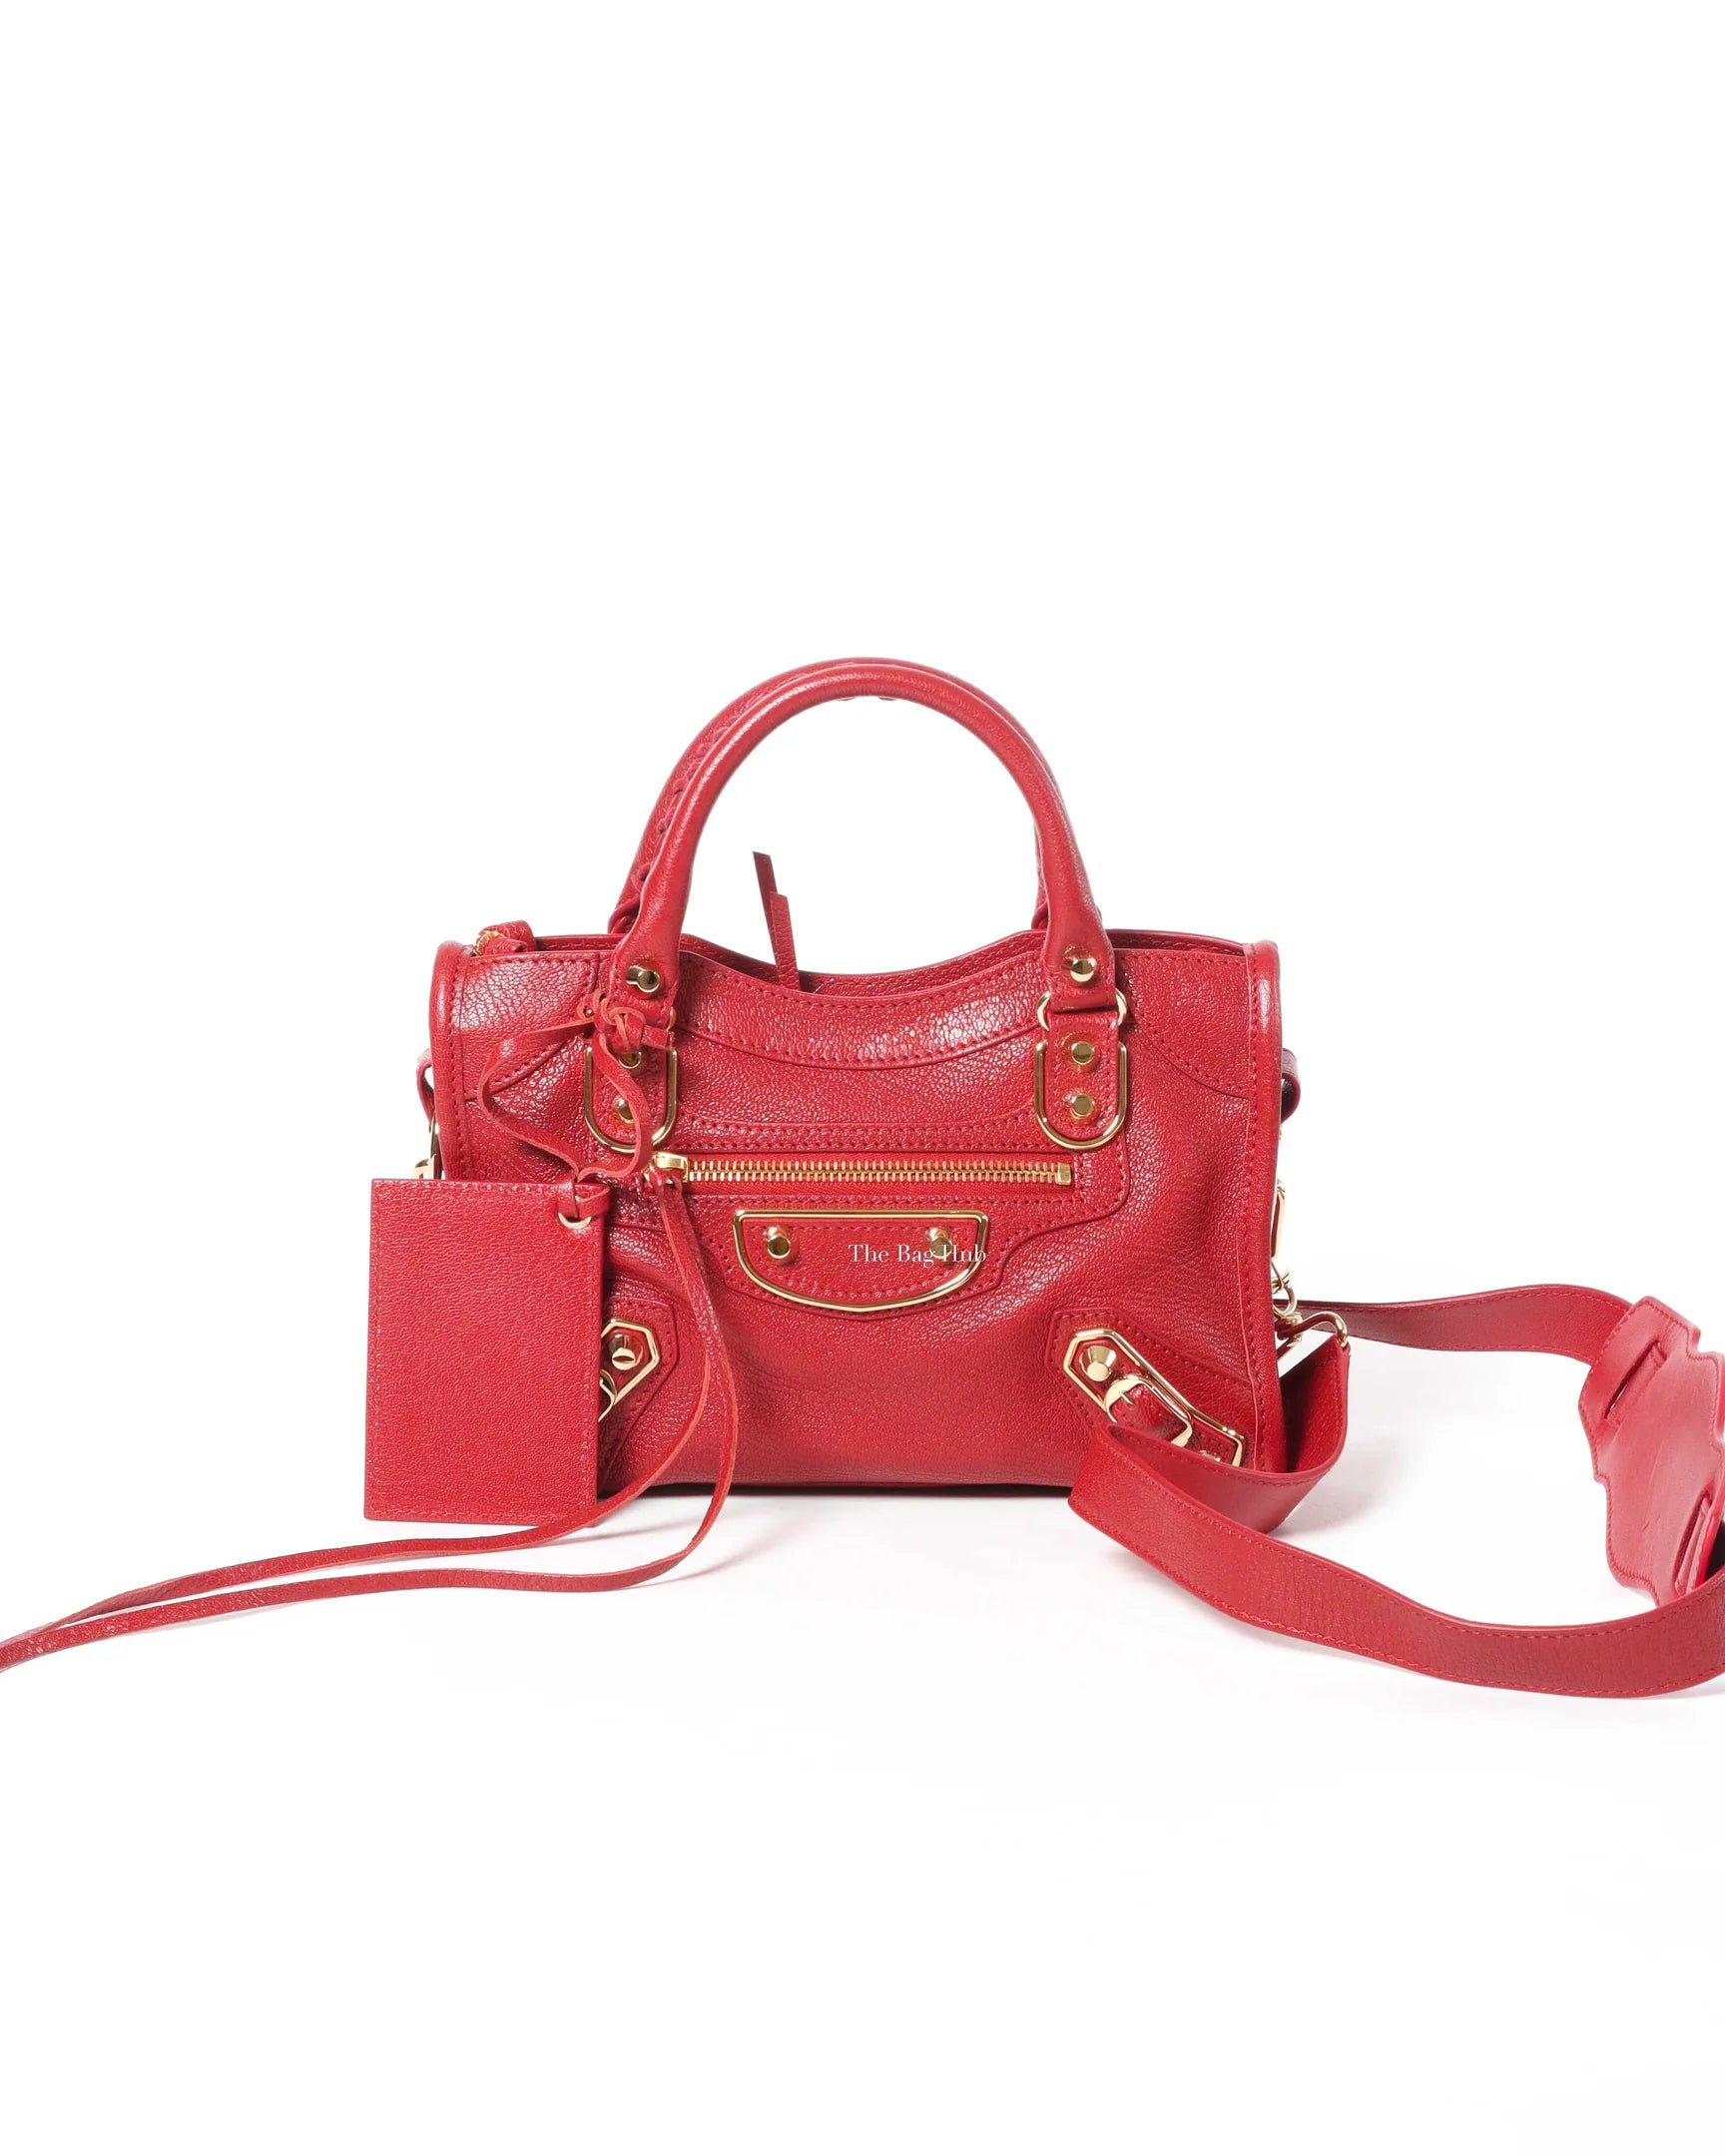 Something Borrowed Balenciaga Red Mini Bag to rent - designer tas huren Nederland, België